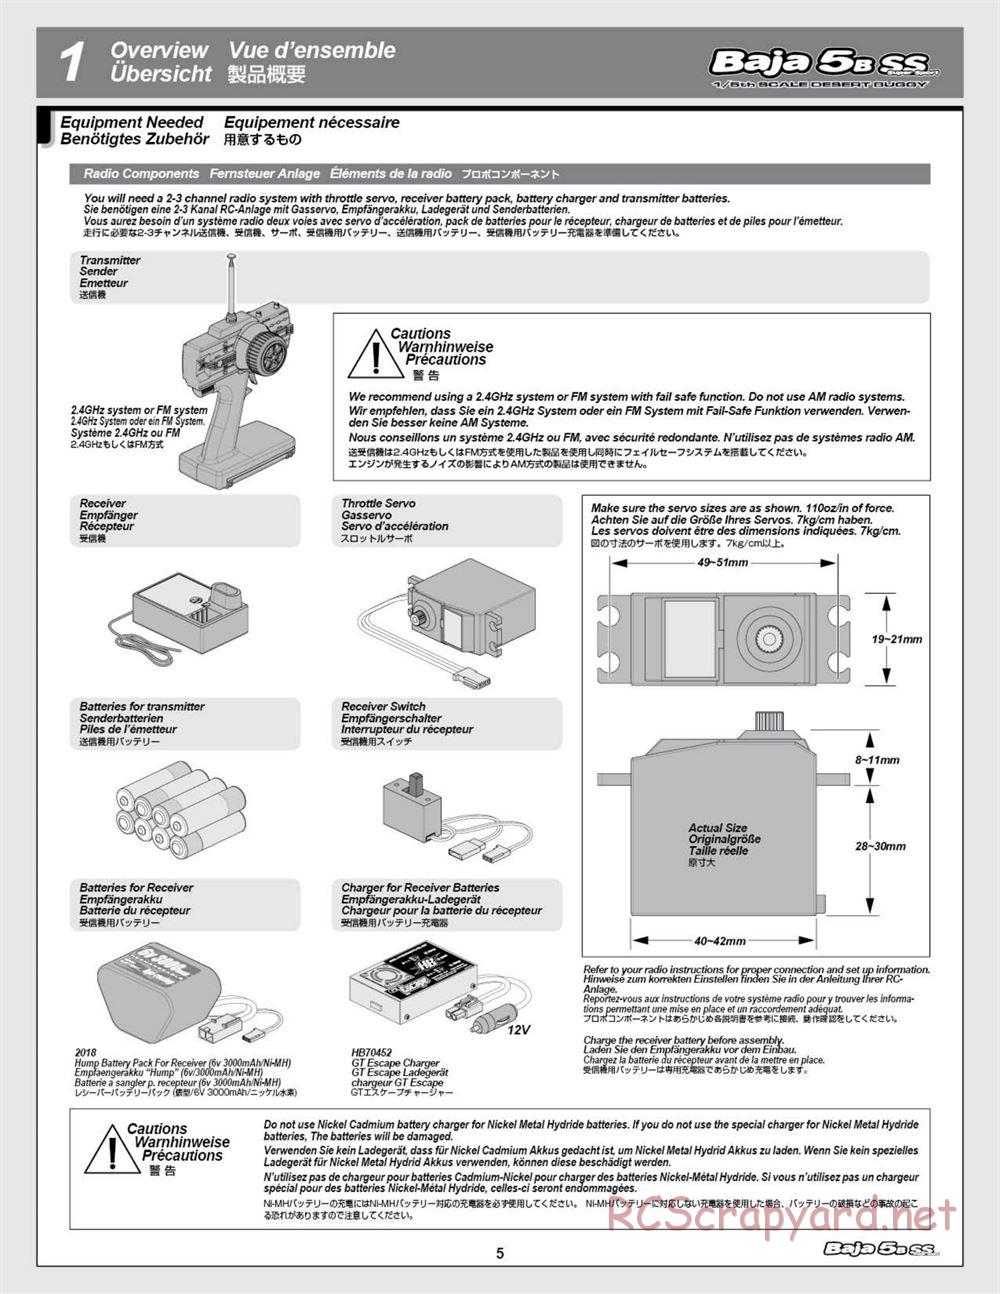 HPI - Baja 5b SS - Manual - Page 5